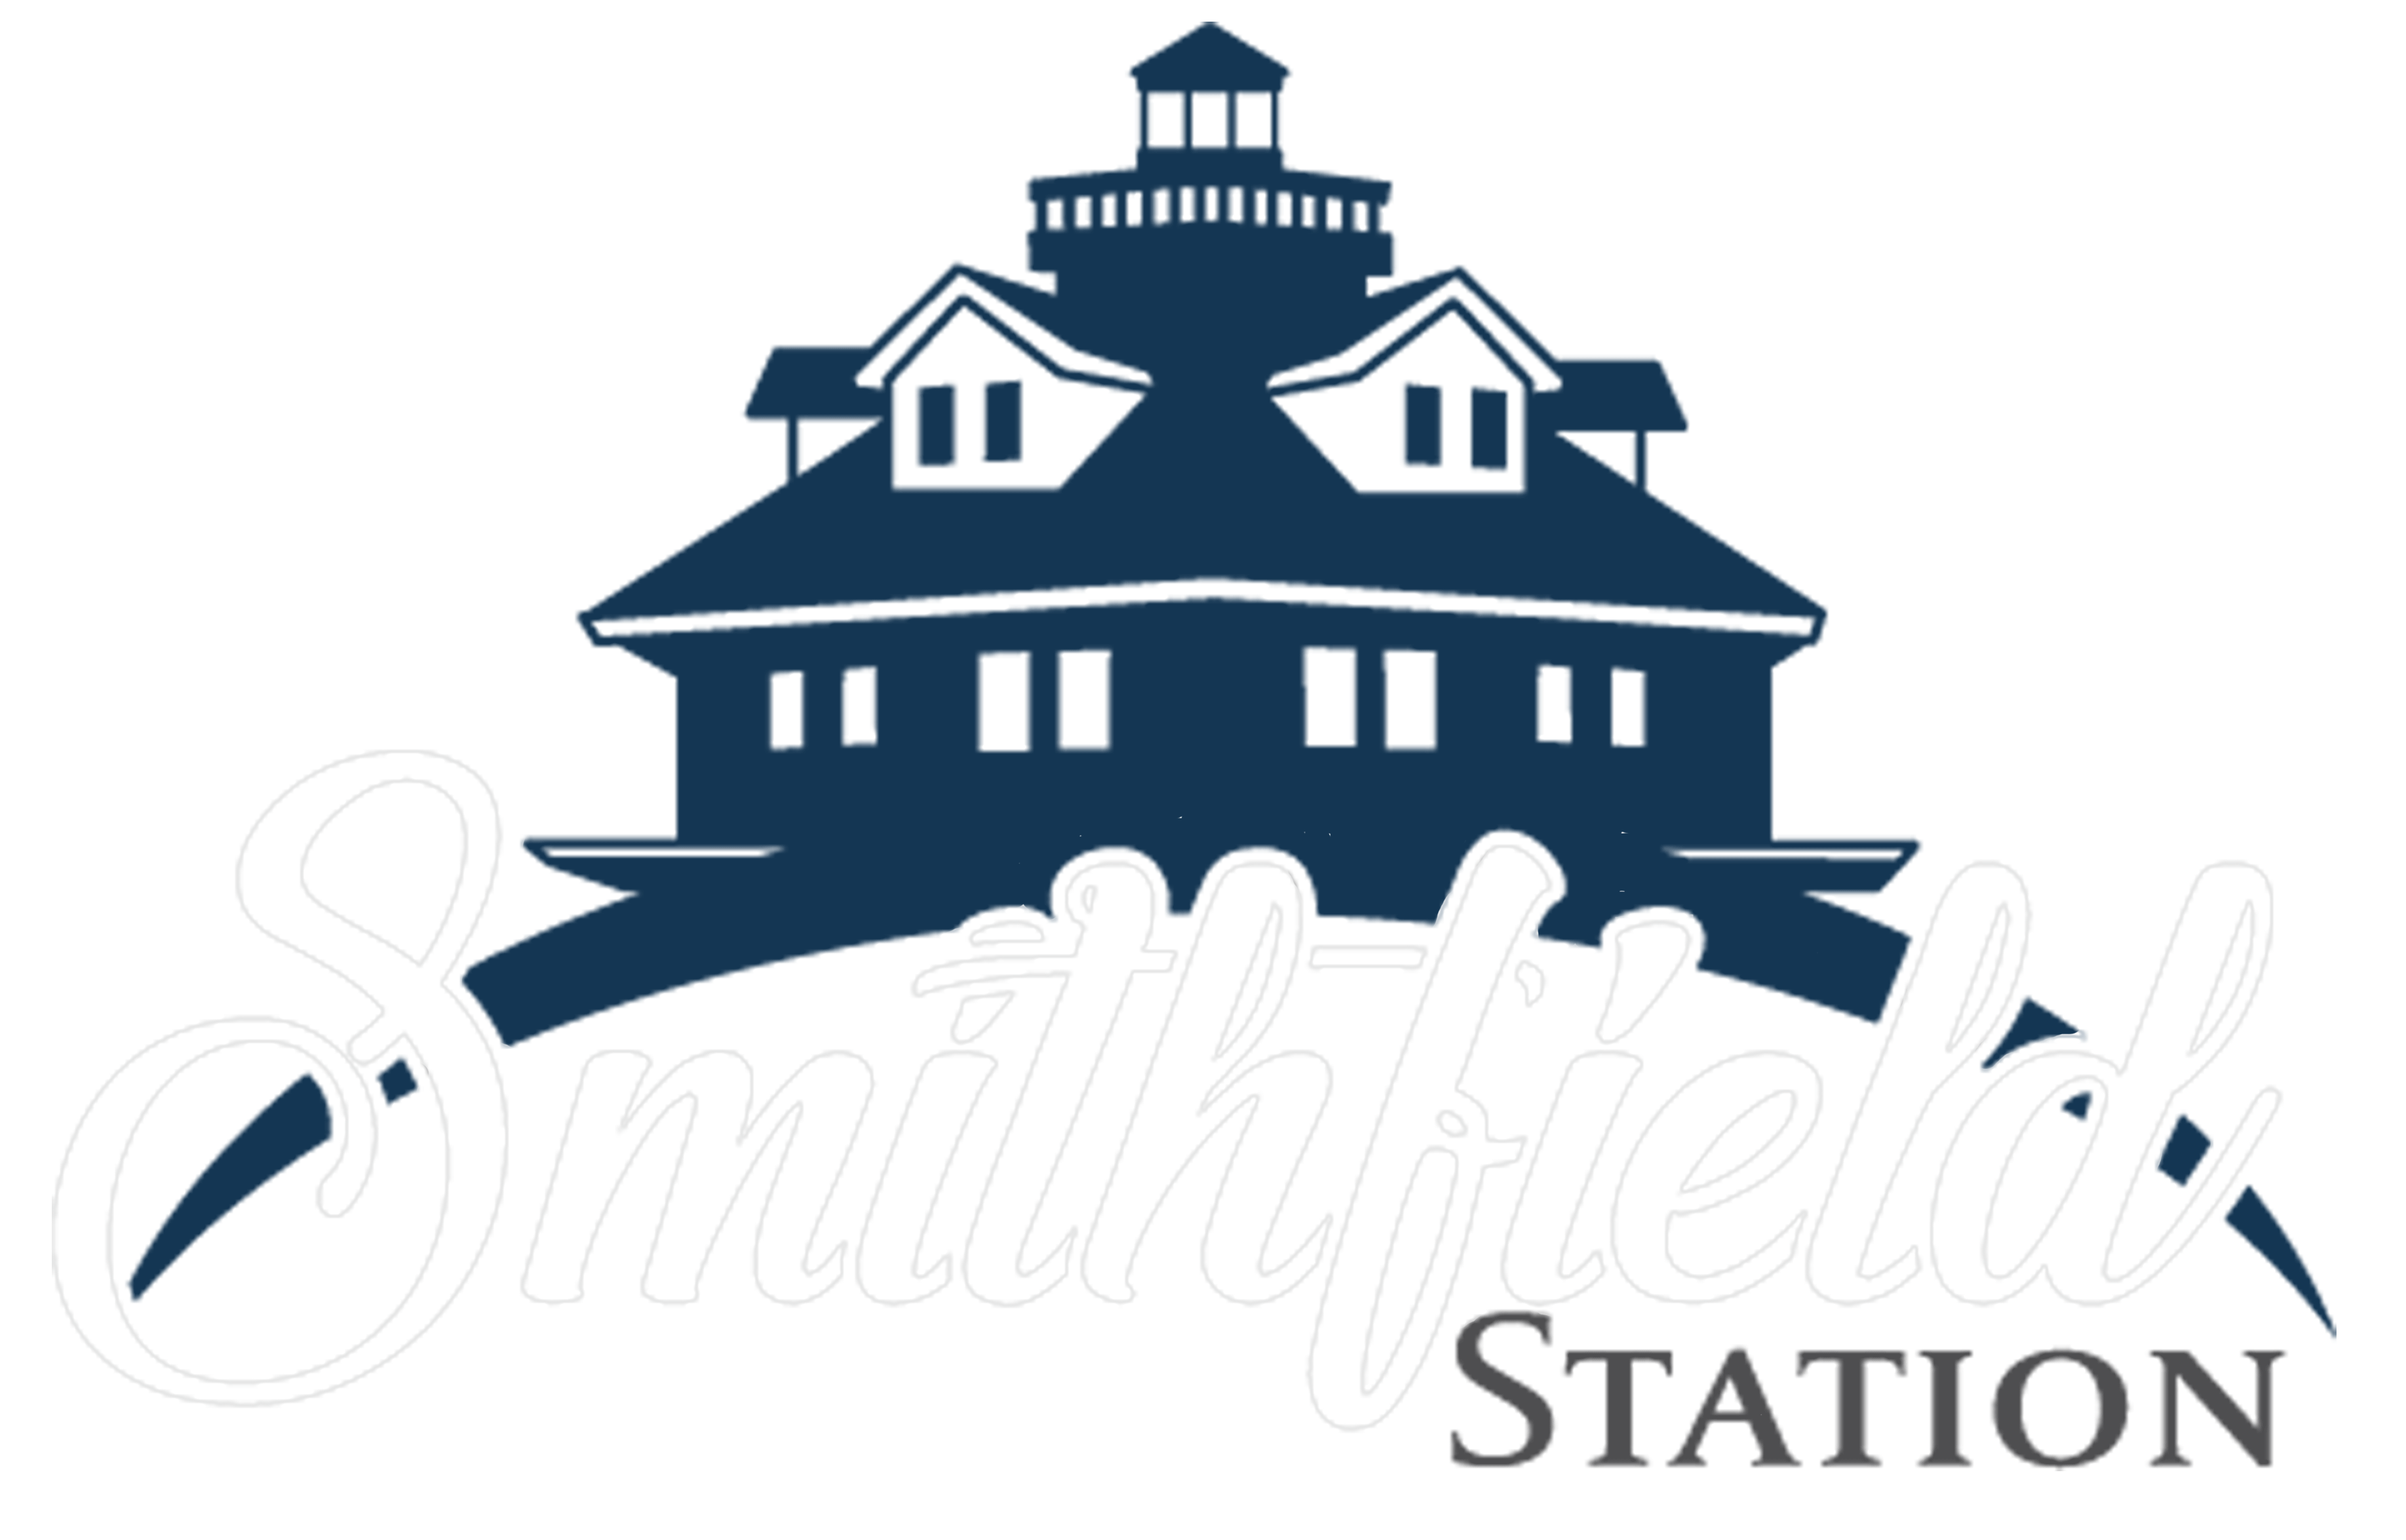 Welcome to Smithfield Station - Your Coastal Virginia Retreat